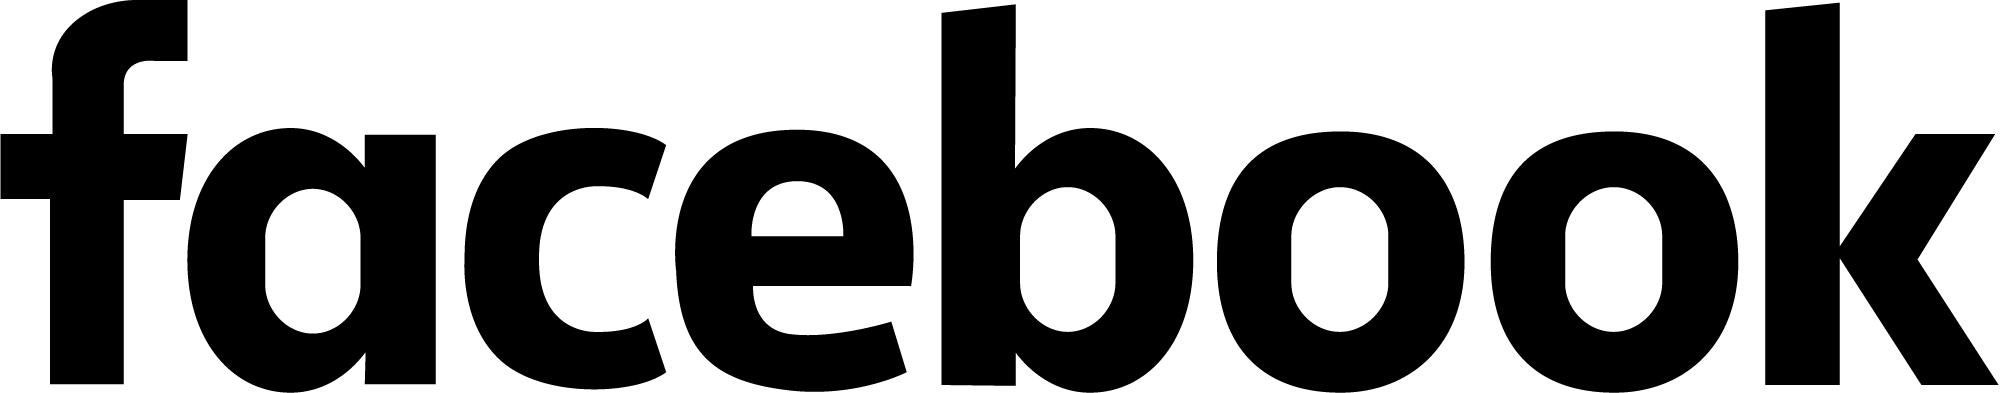 Facebook Logo Transparent Black